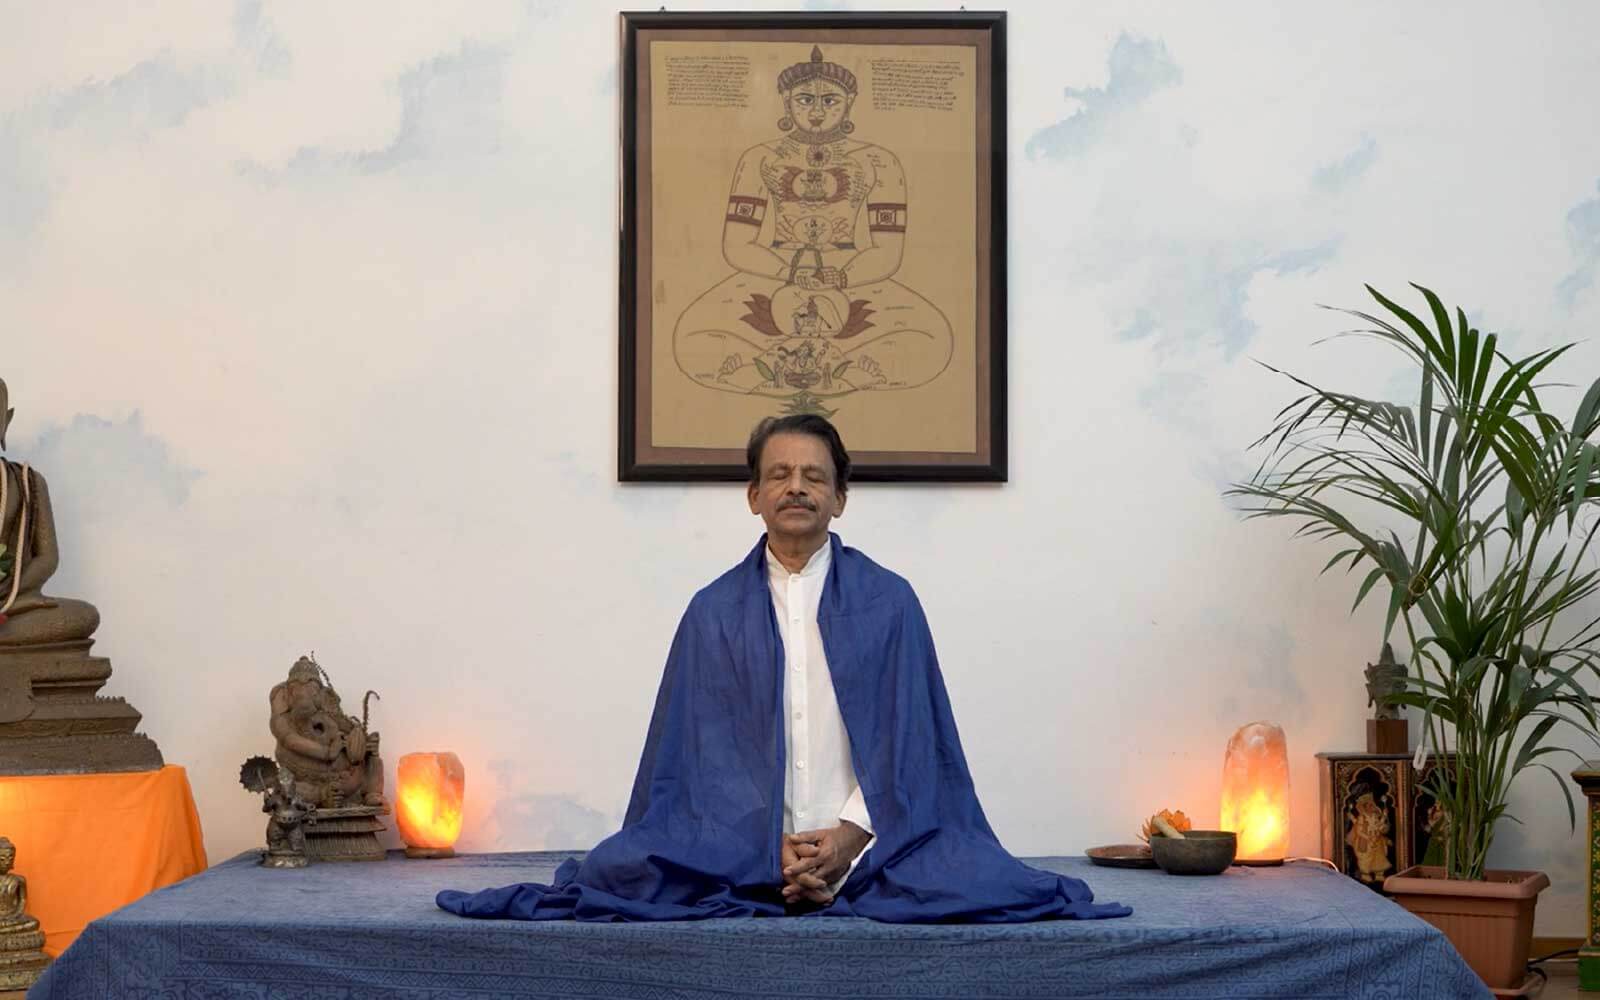 II maestro James Eruppakkattu siede in meditazione nella posizione del loto